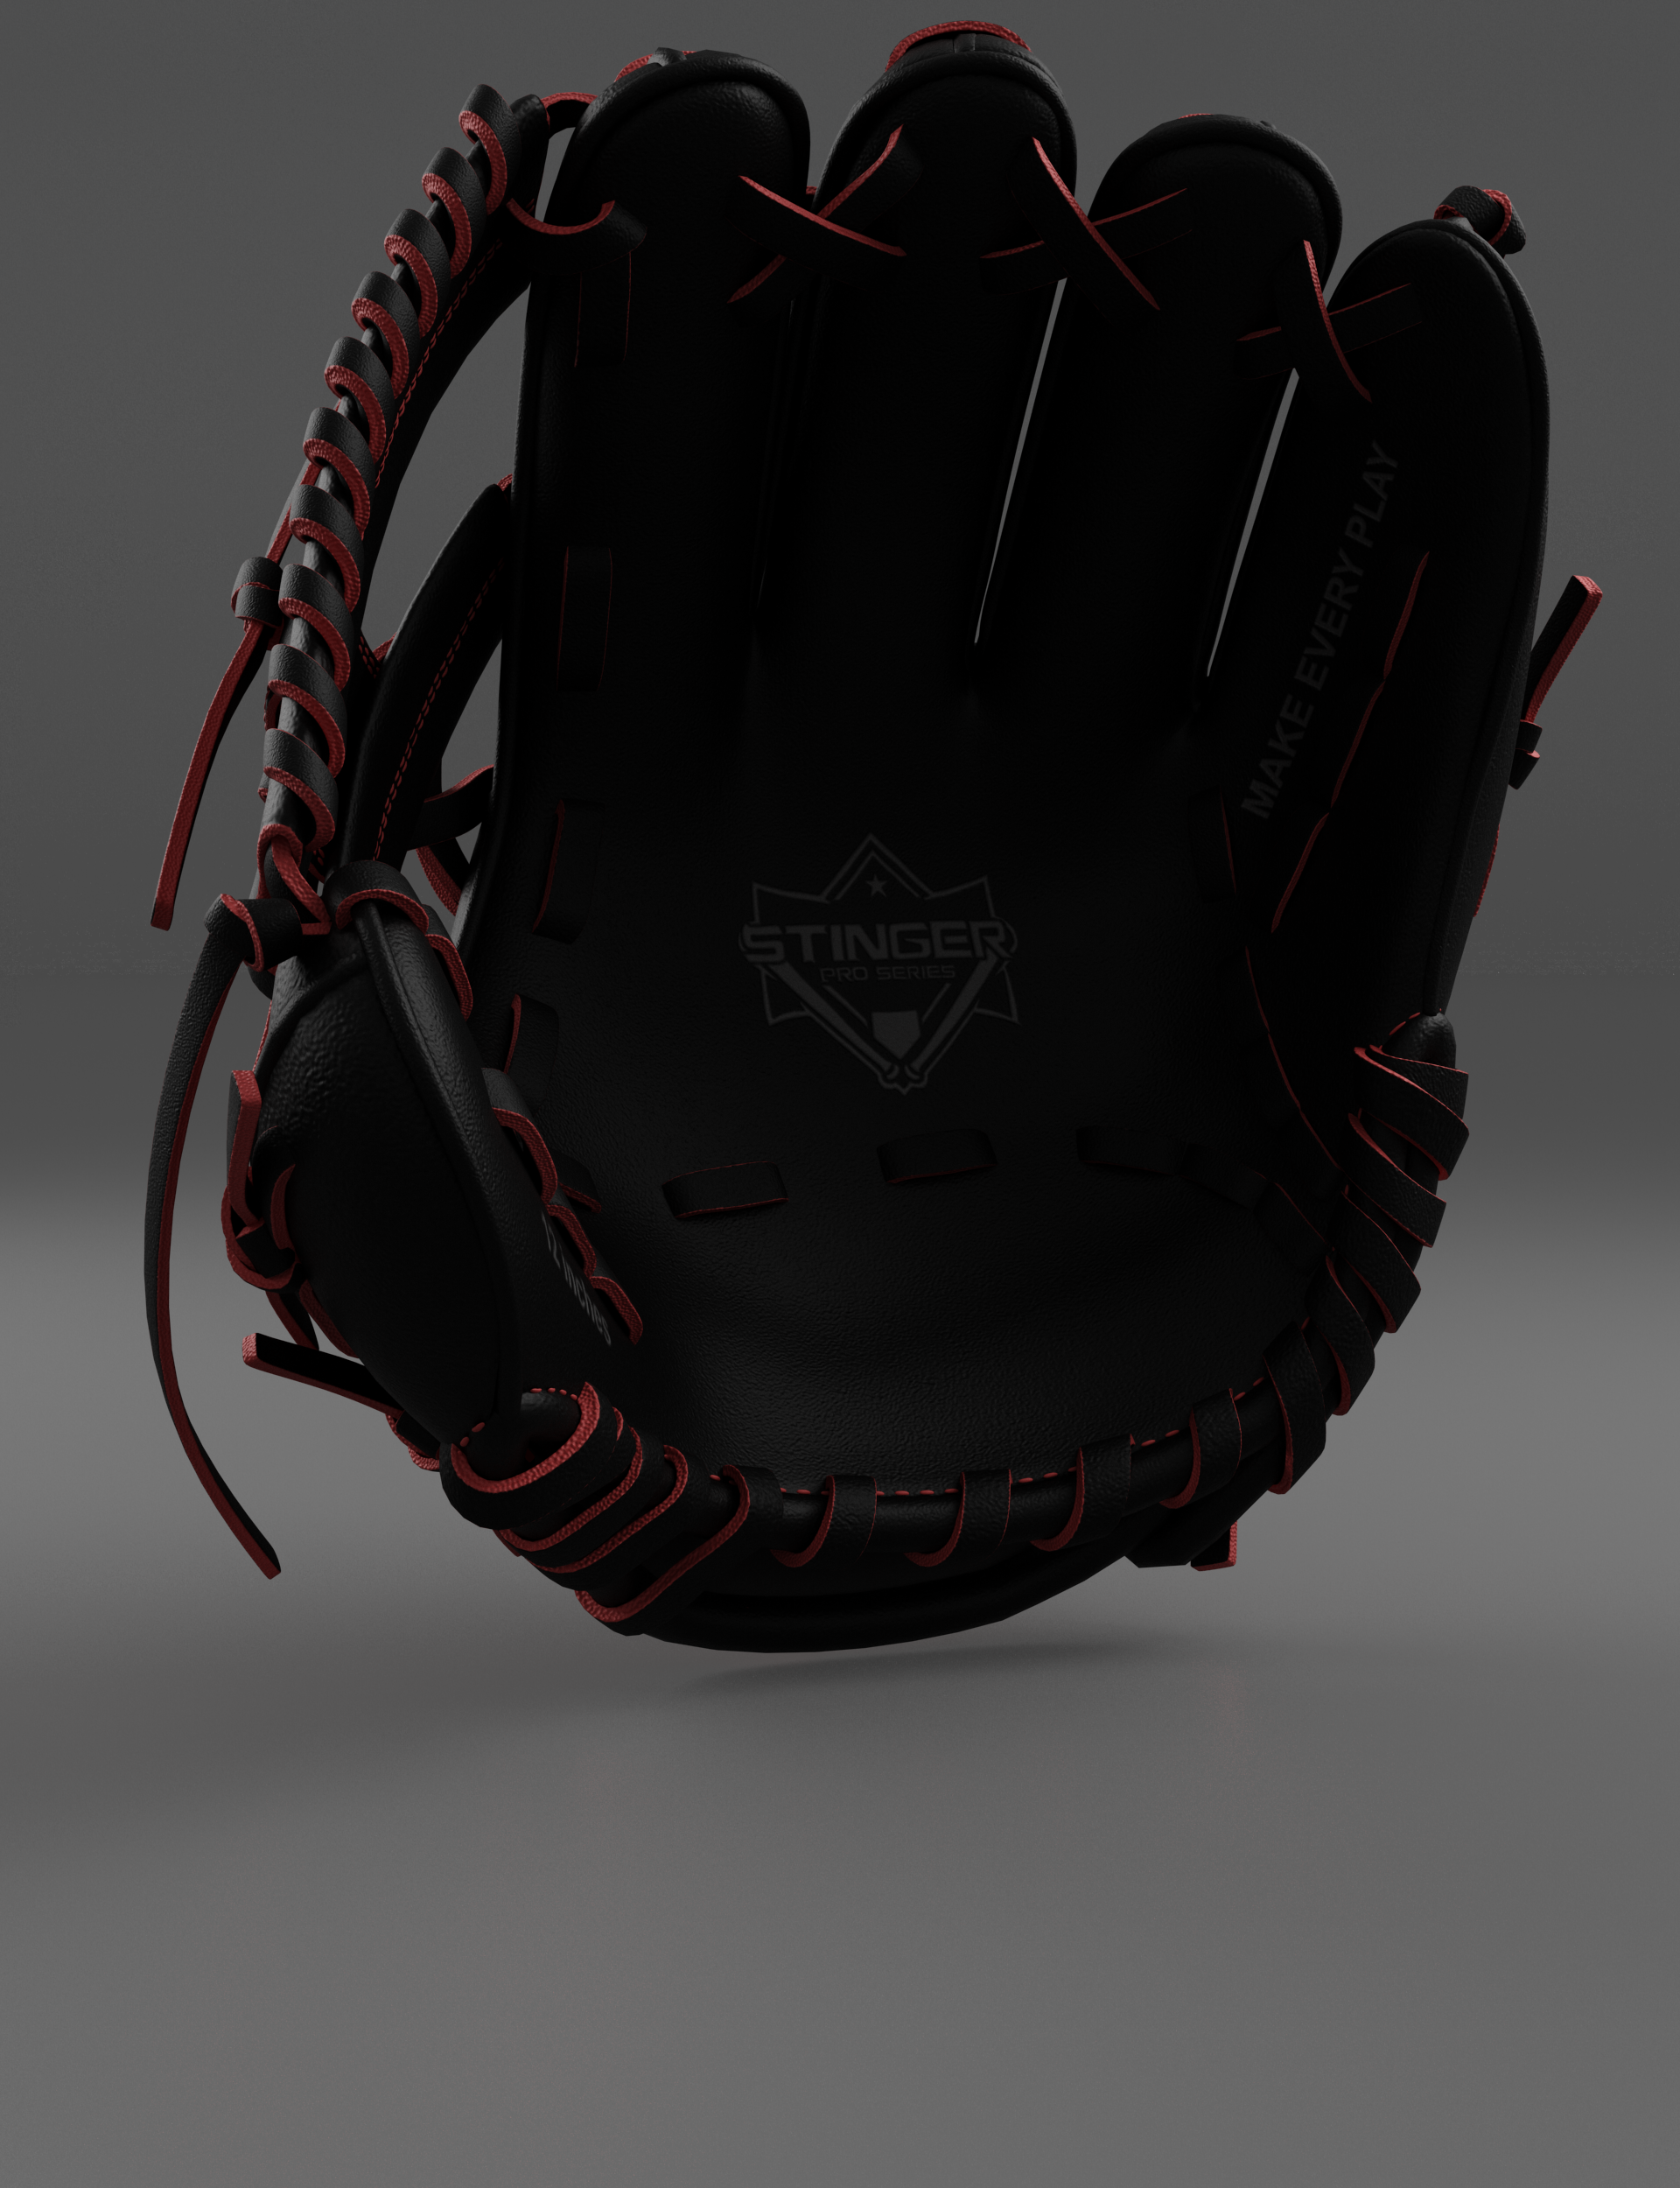 Baseball Glove Black Render